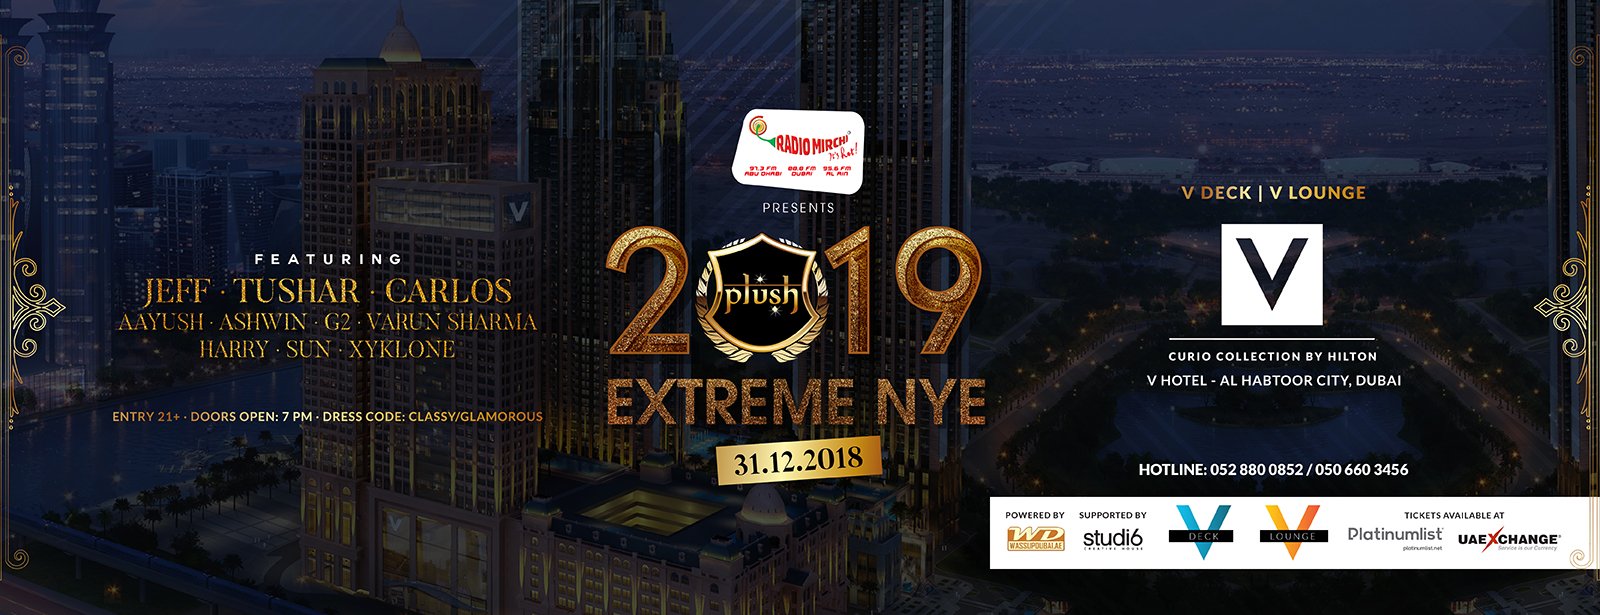 Plush Extreme NYE 2019 at the V Hotel Dubai - Coming Soon in UAE